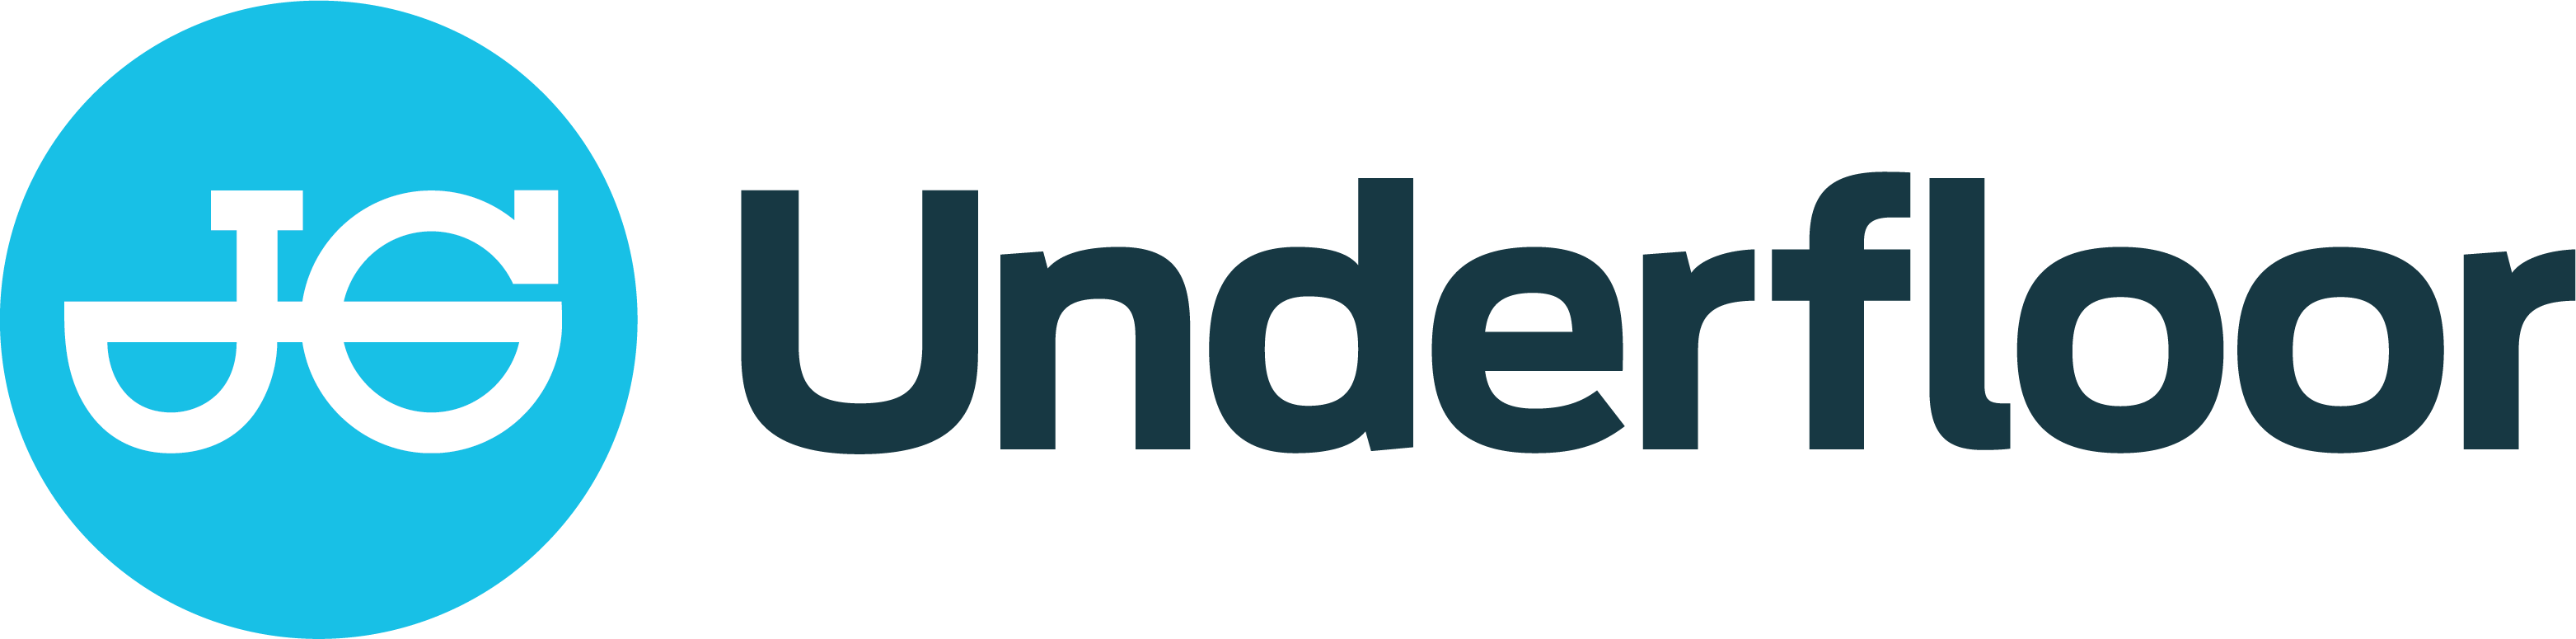 JG Underfloor Logo